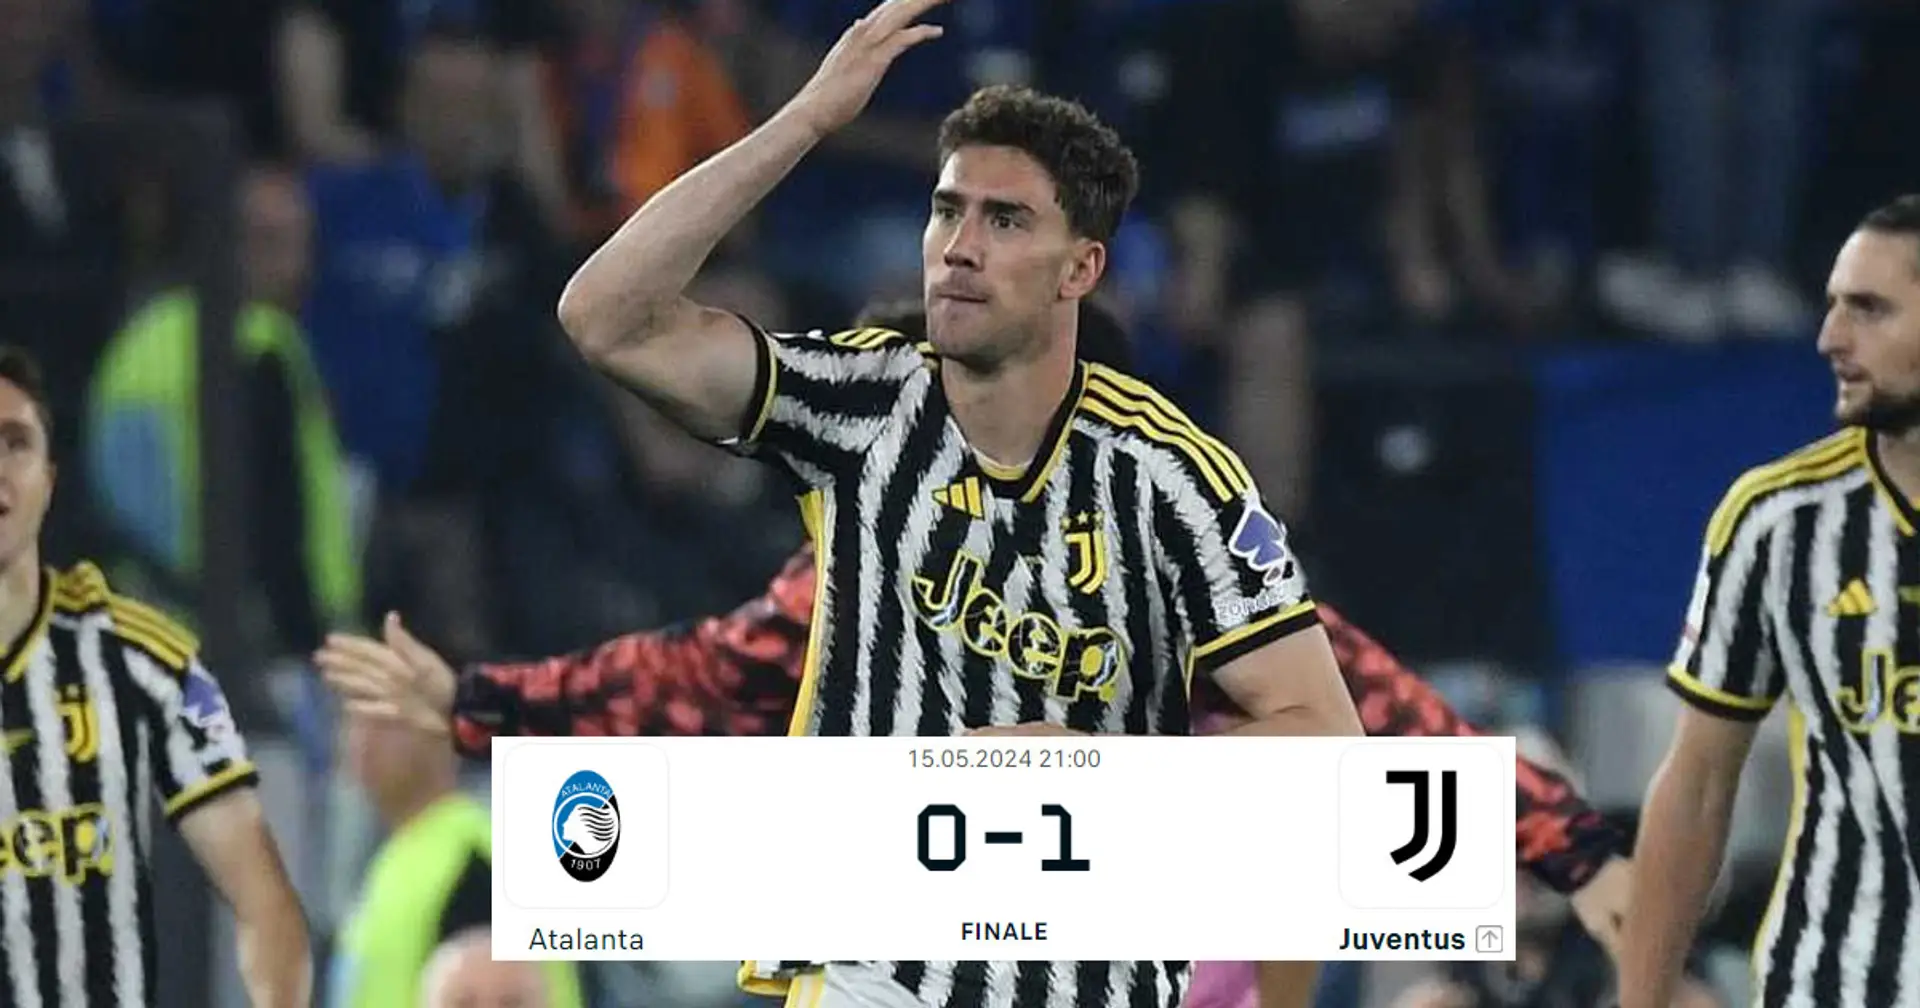 La Juventus vince la Coppa Italia 23/24, Atalanta KO nonostante l'arbitraggio: decide un sontuoso Vlahovic, la sintesi della partita